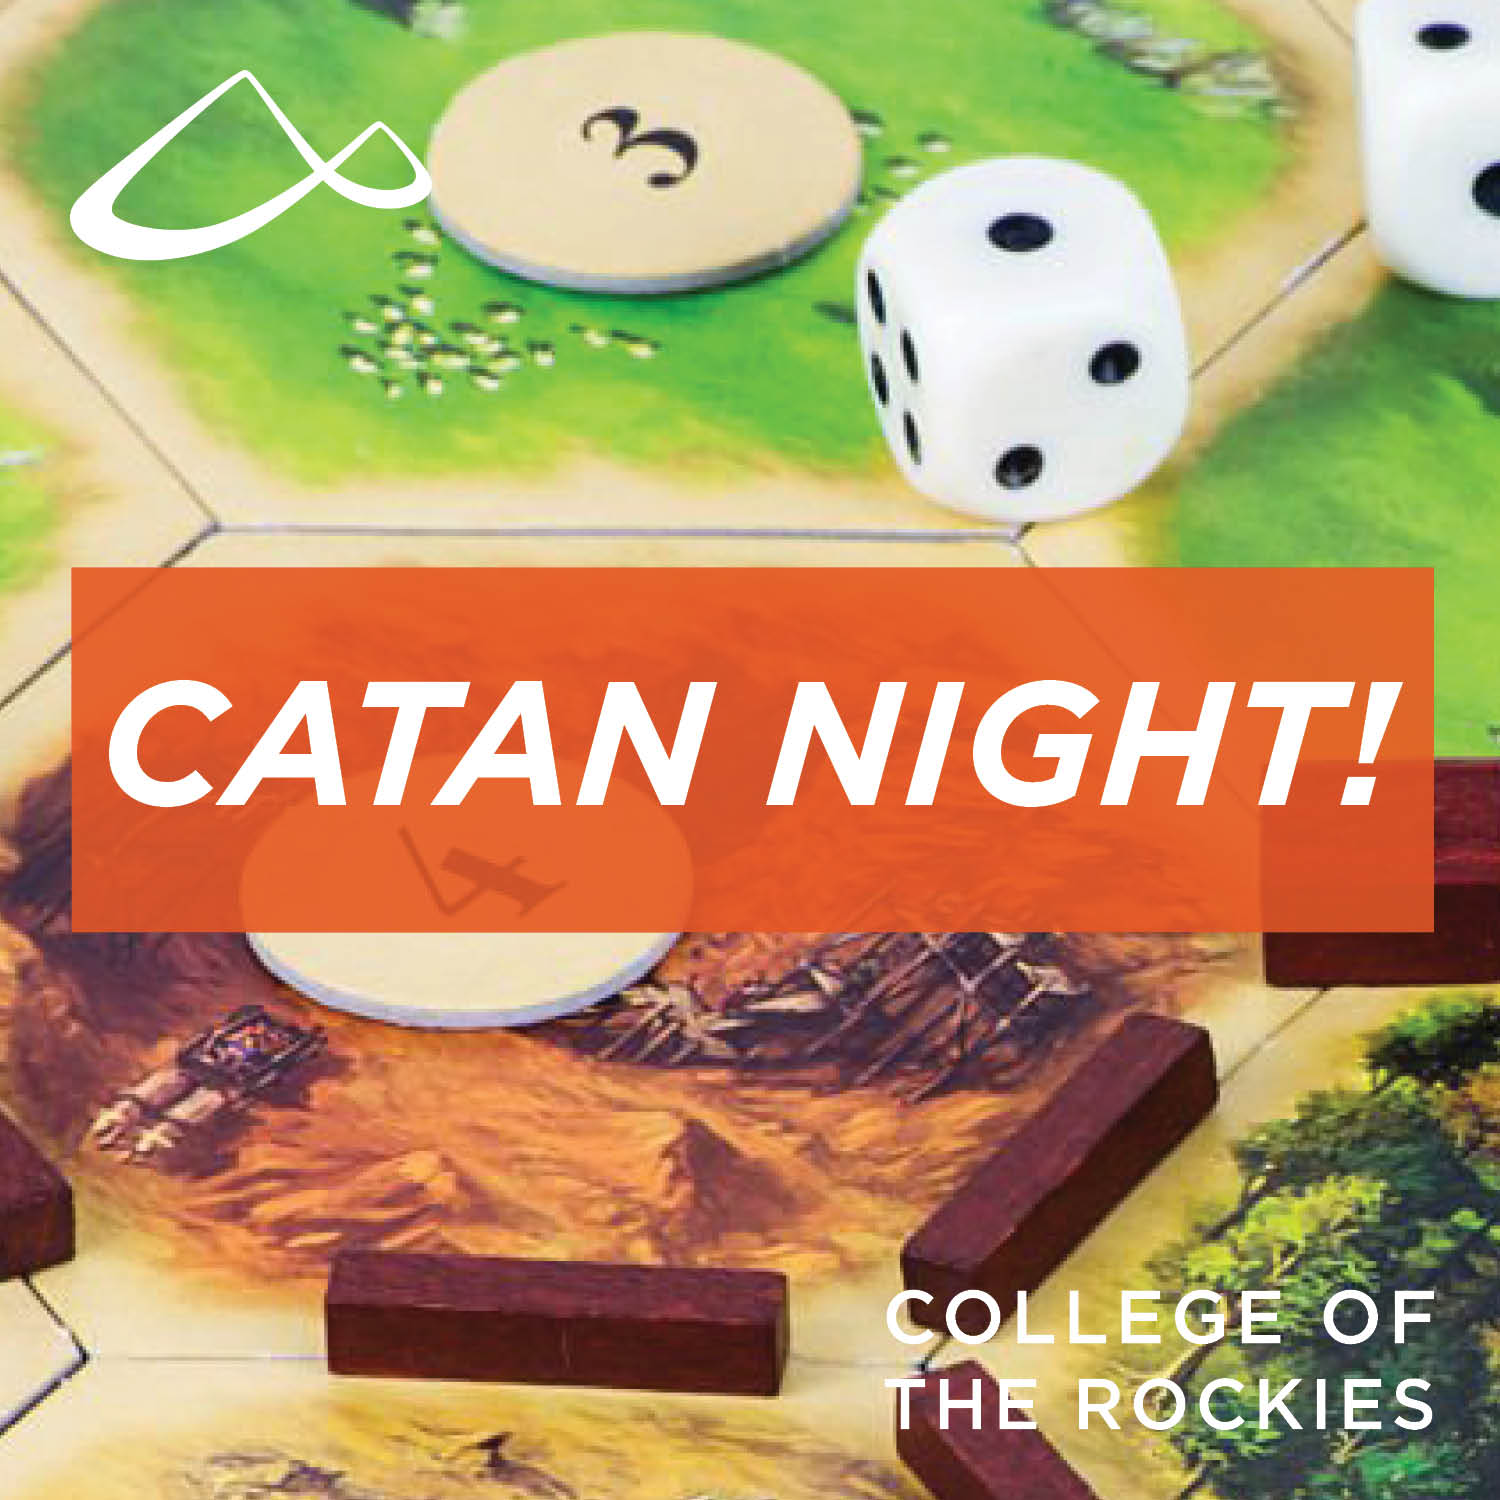 Infographic promoting Catan Night